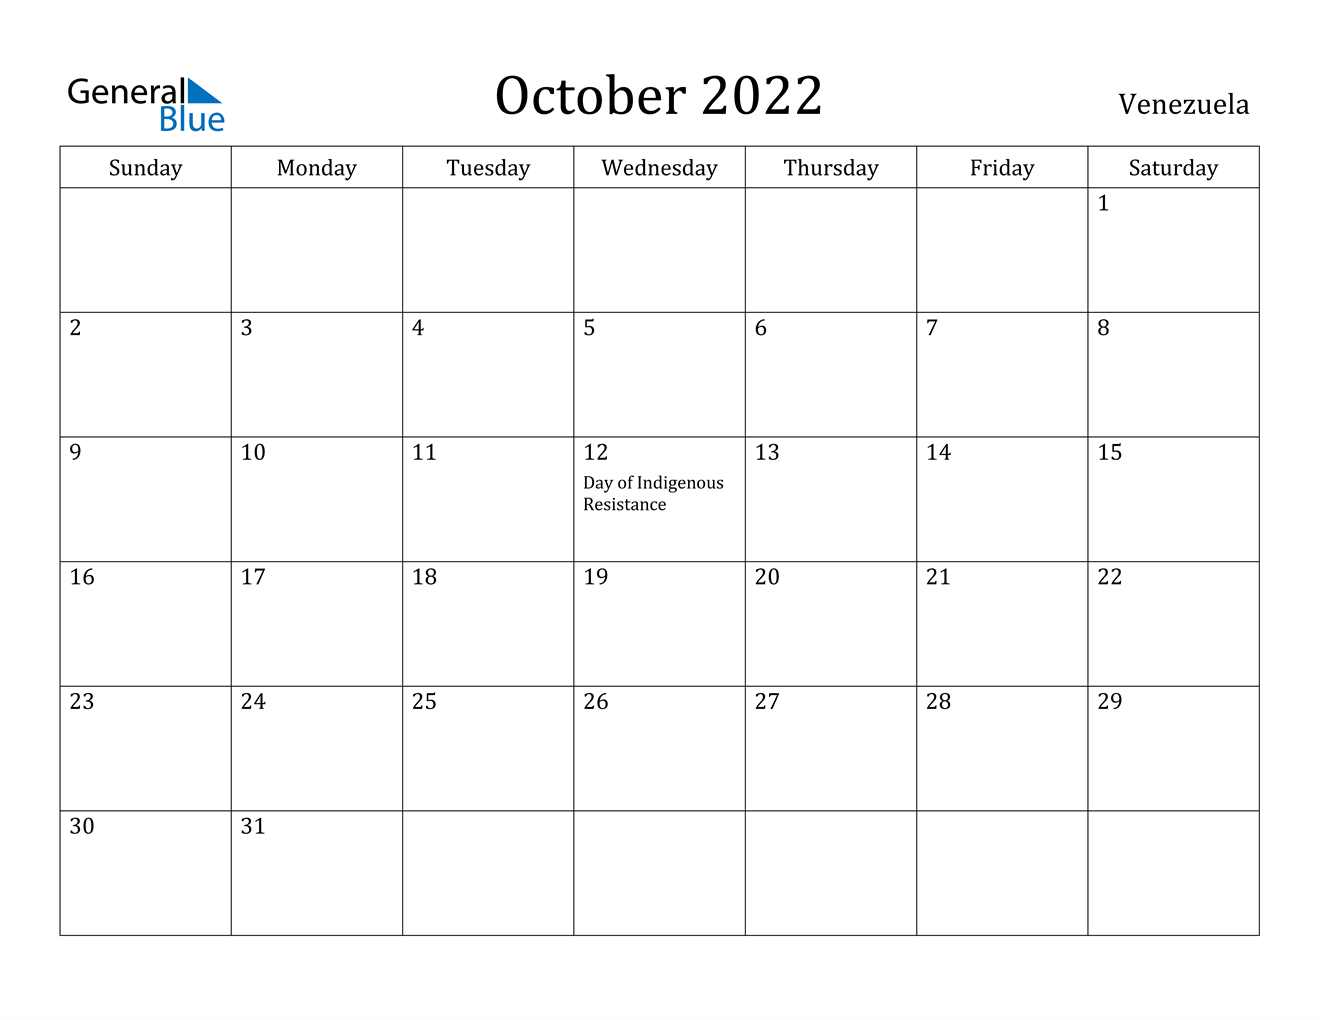 October 2022 Calendar - Venezuela